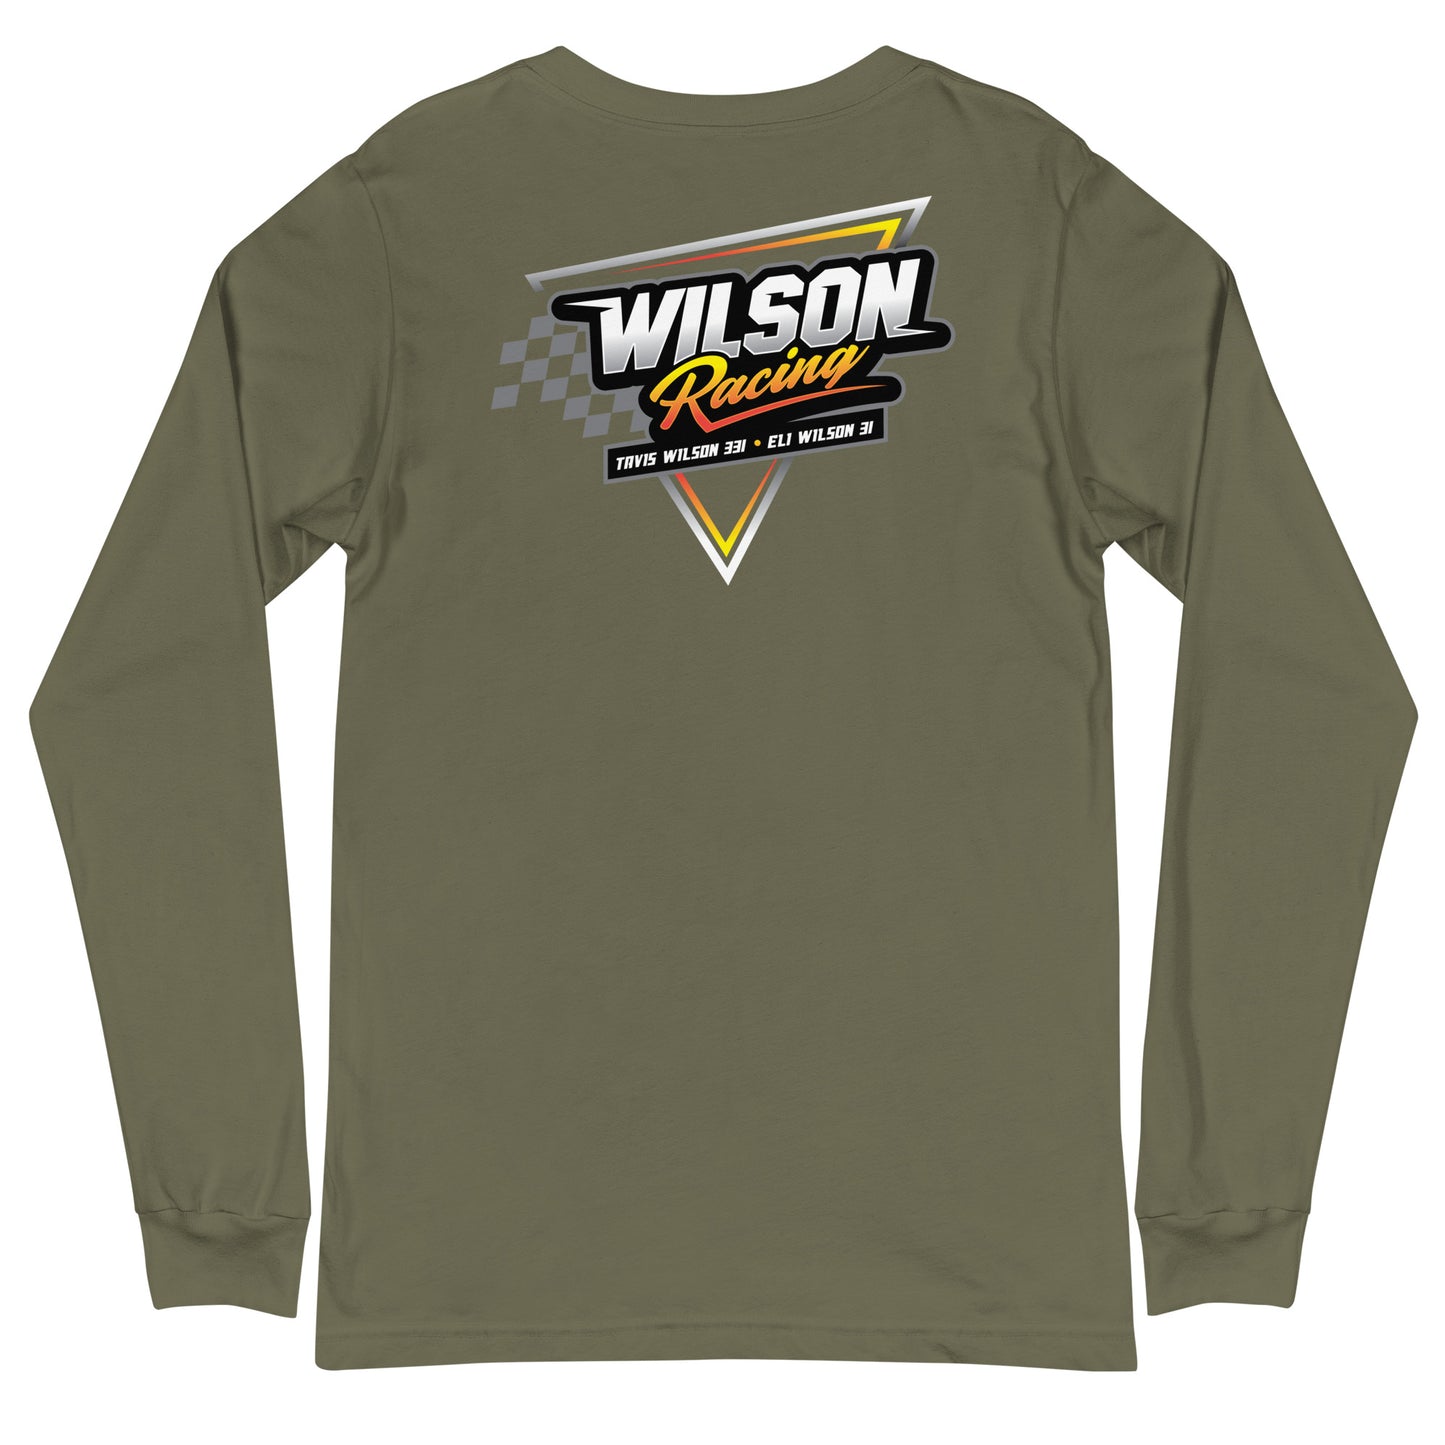 Wilson Racing Long Sleeve Tee